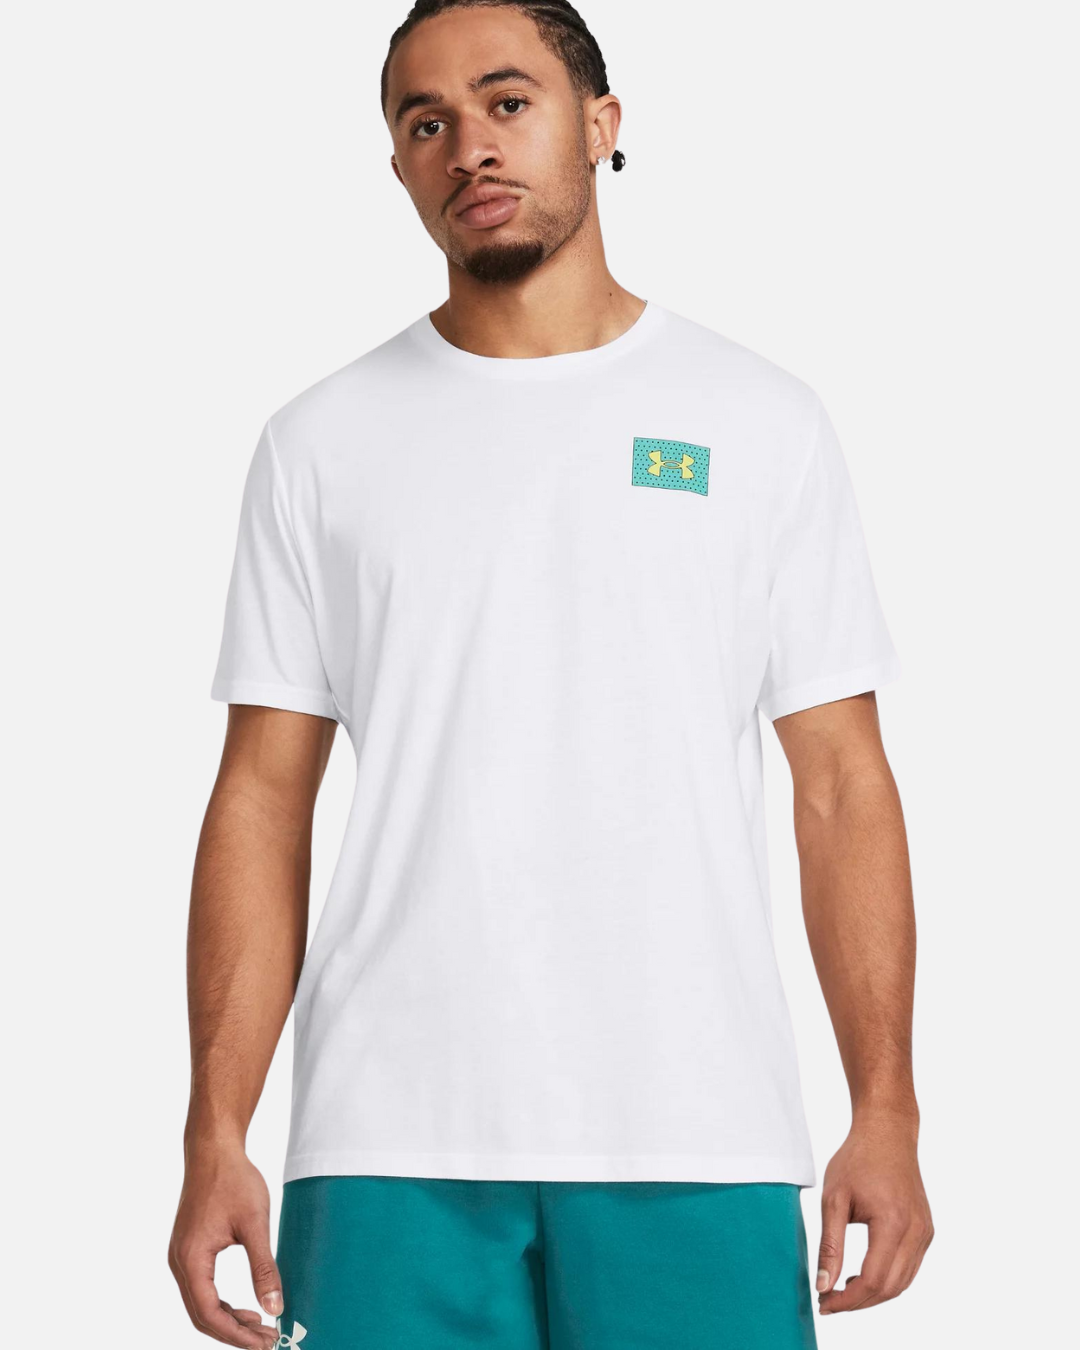 T-shirt Under Armour Color Block con logo sul petto sinistro - bianca